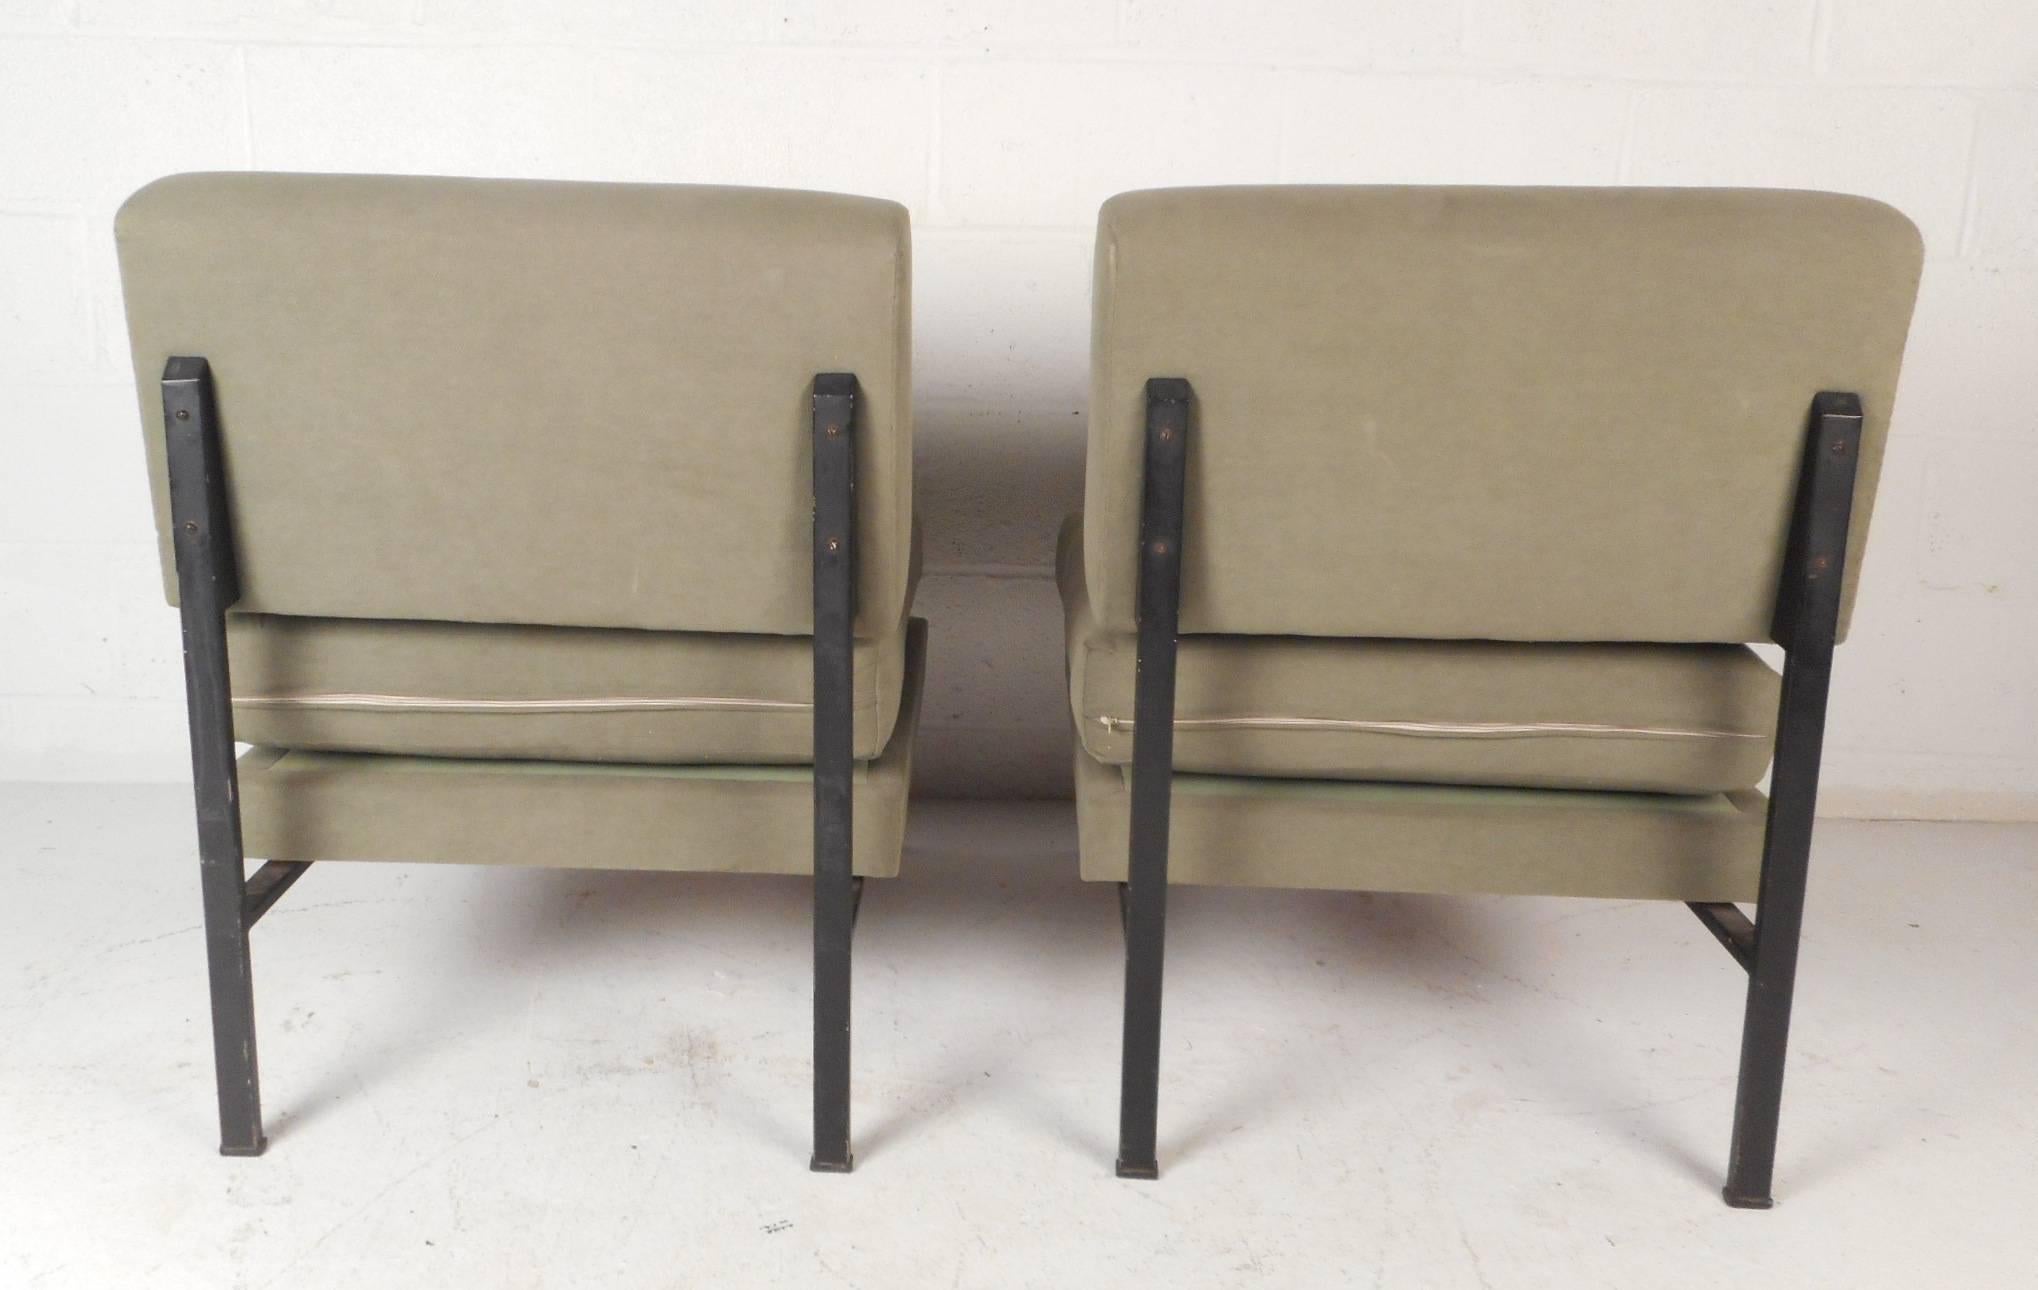 Pair of Mid-Century Modern Italian Trafilisa Lounge Chairs with Adjustable Seats 1